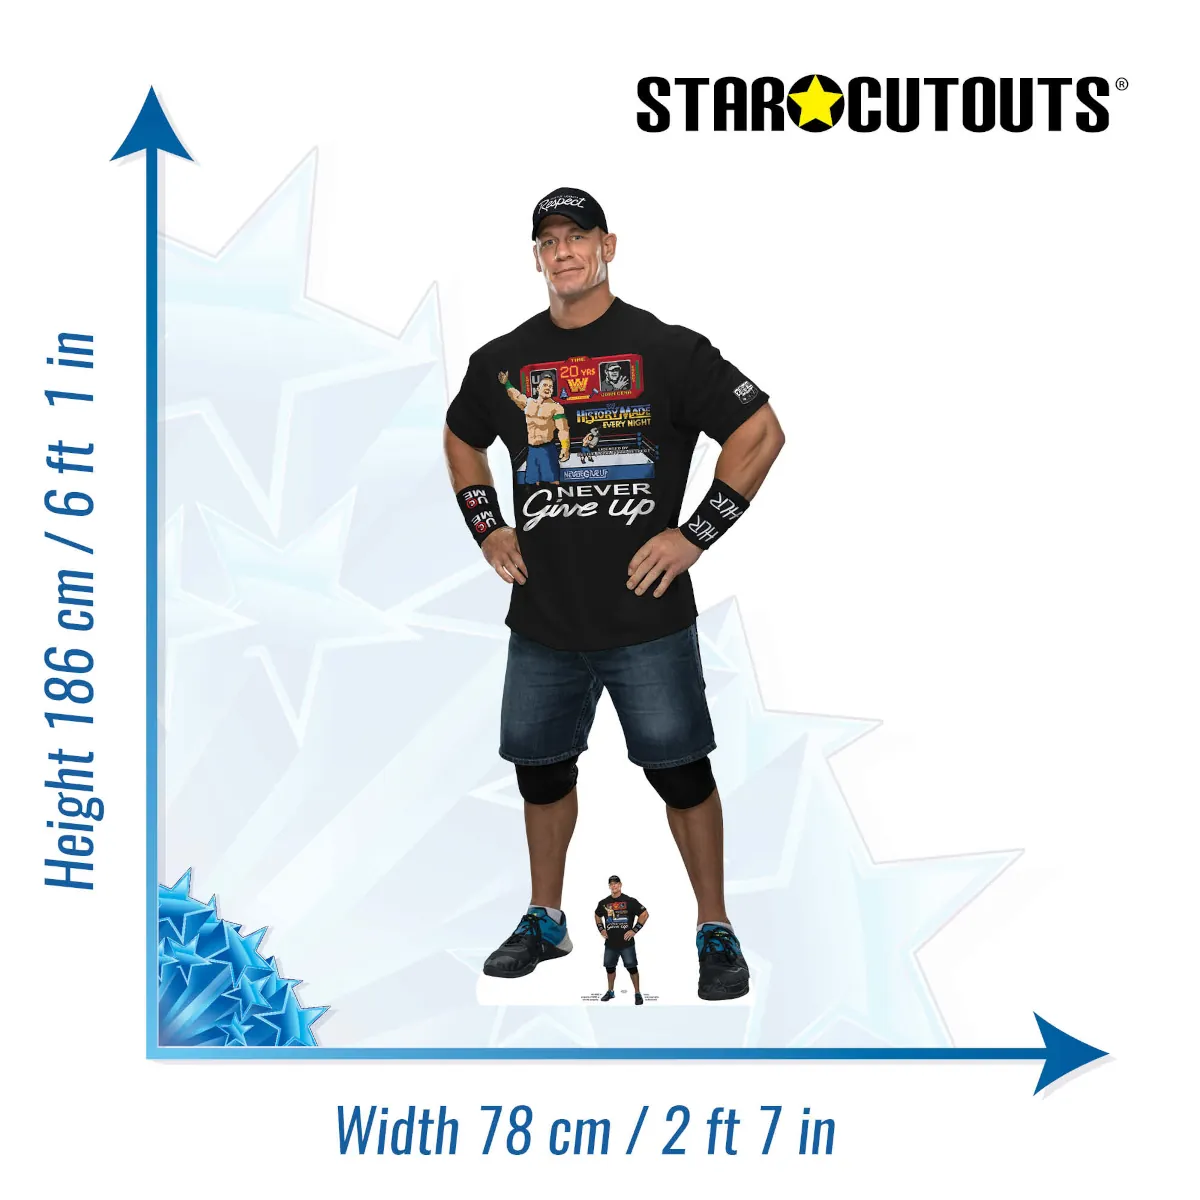 SC4158 John Cena 'Black Outfit' (WWE) Official Lifesize + Mini Cardboard Cutout Standee Size